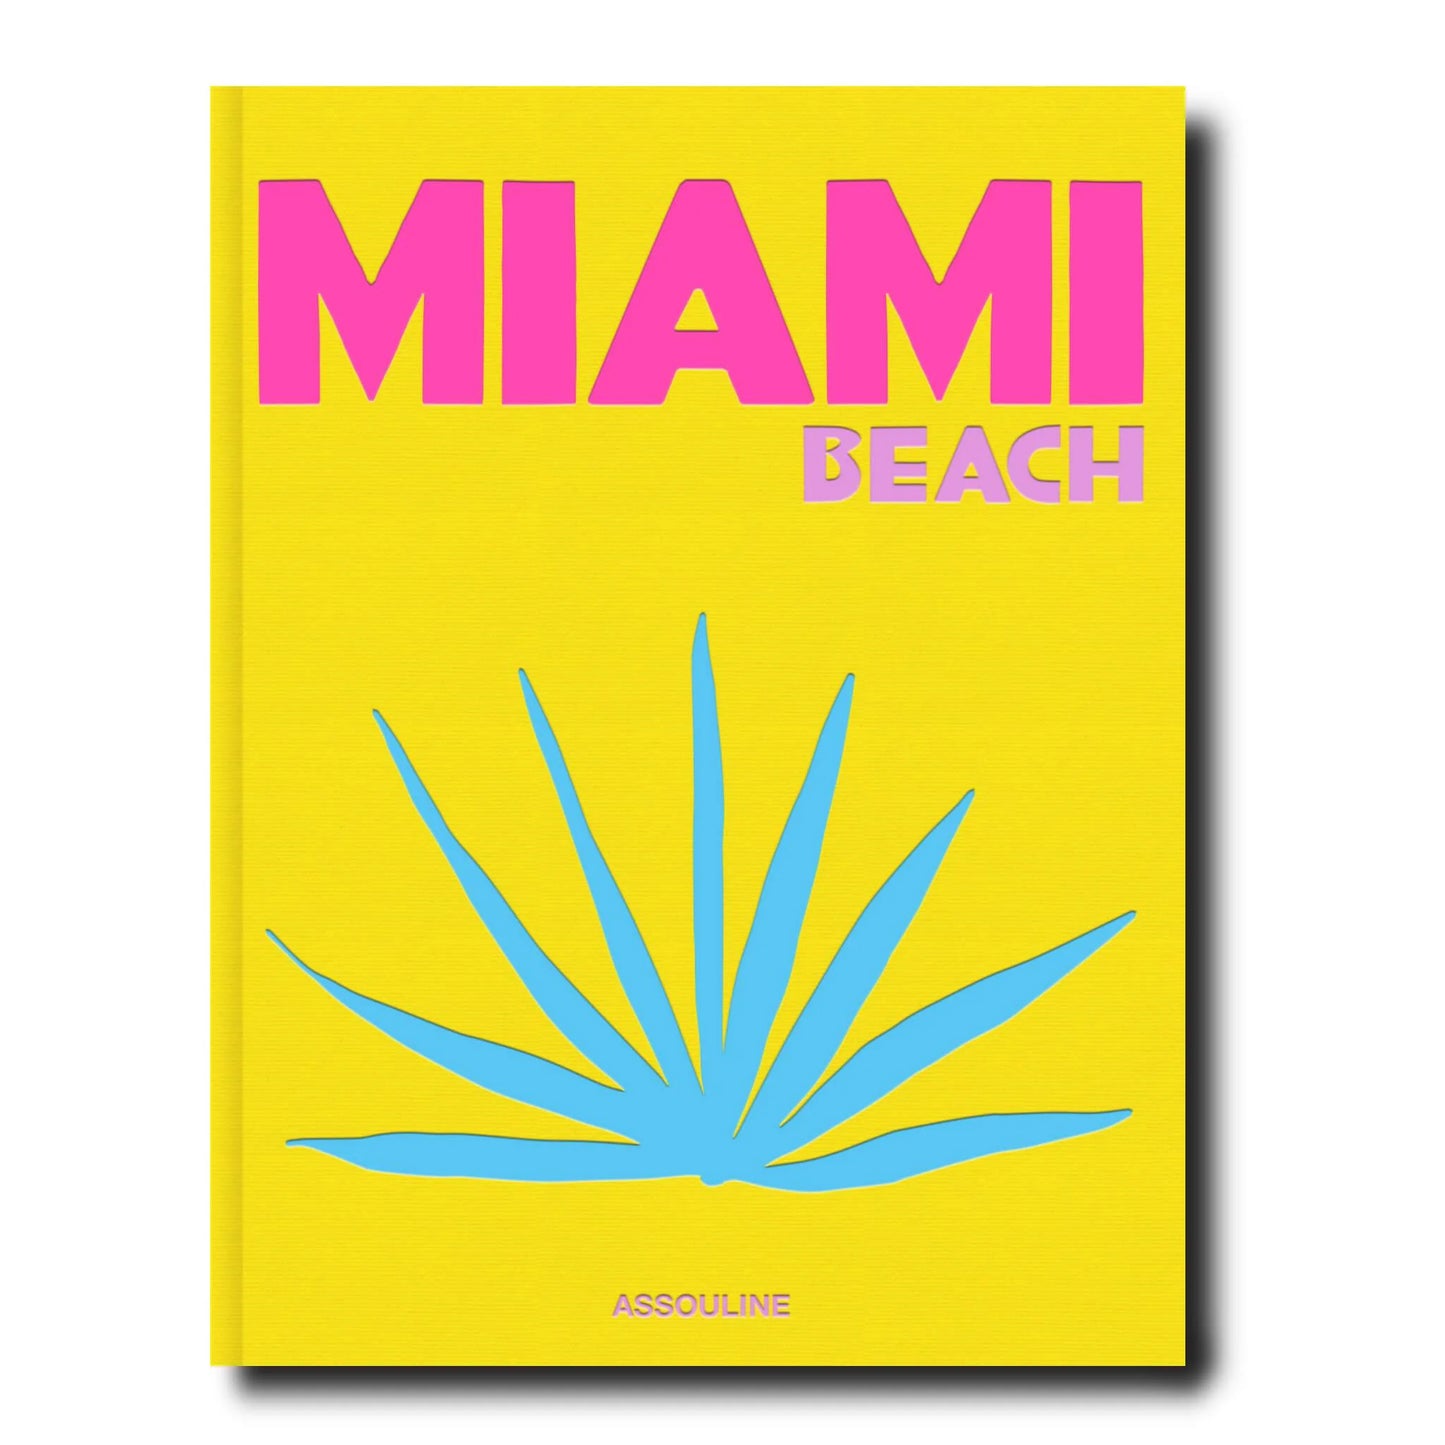 Travel Book Books in Miami Beach at Wrapsody